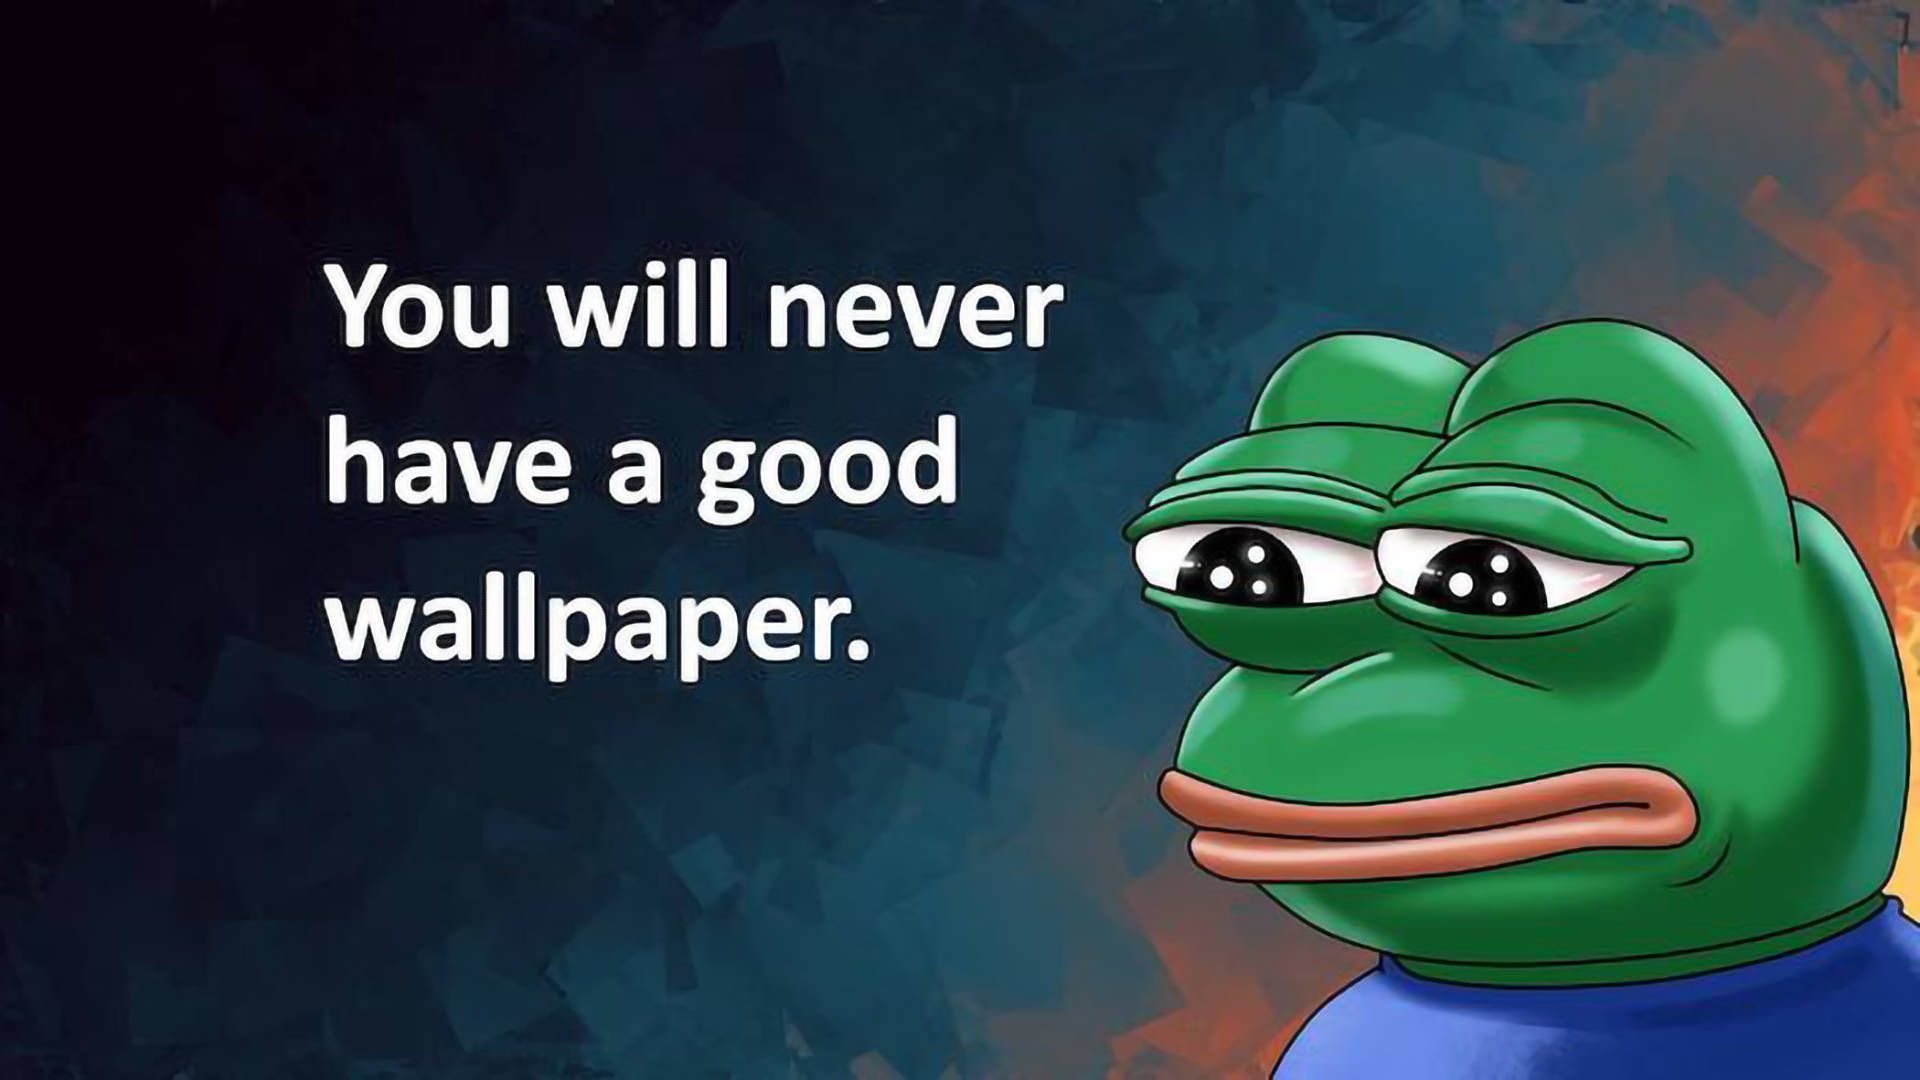 Pepe the frog meme wallpaper 1920x1080 - Funny